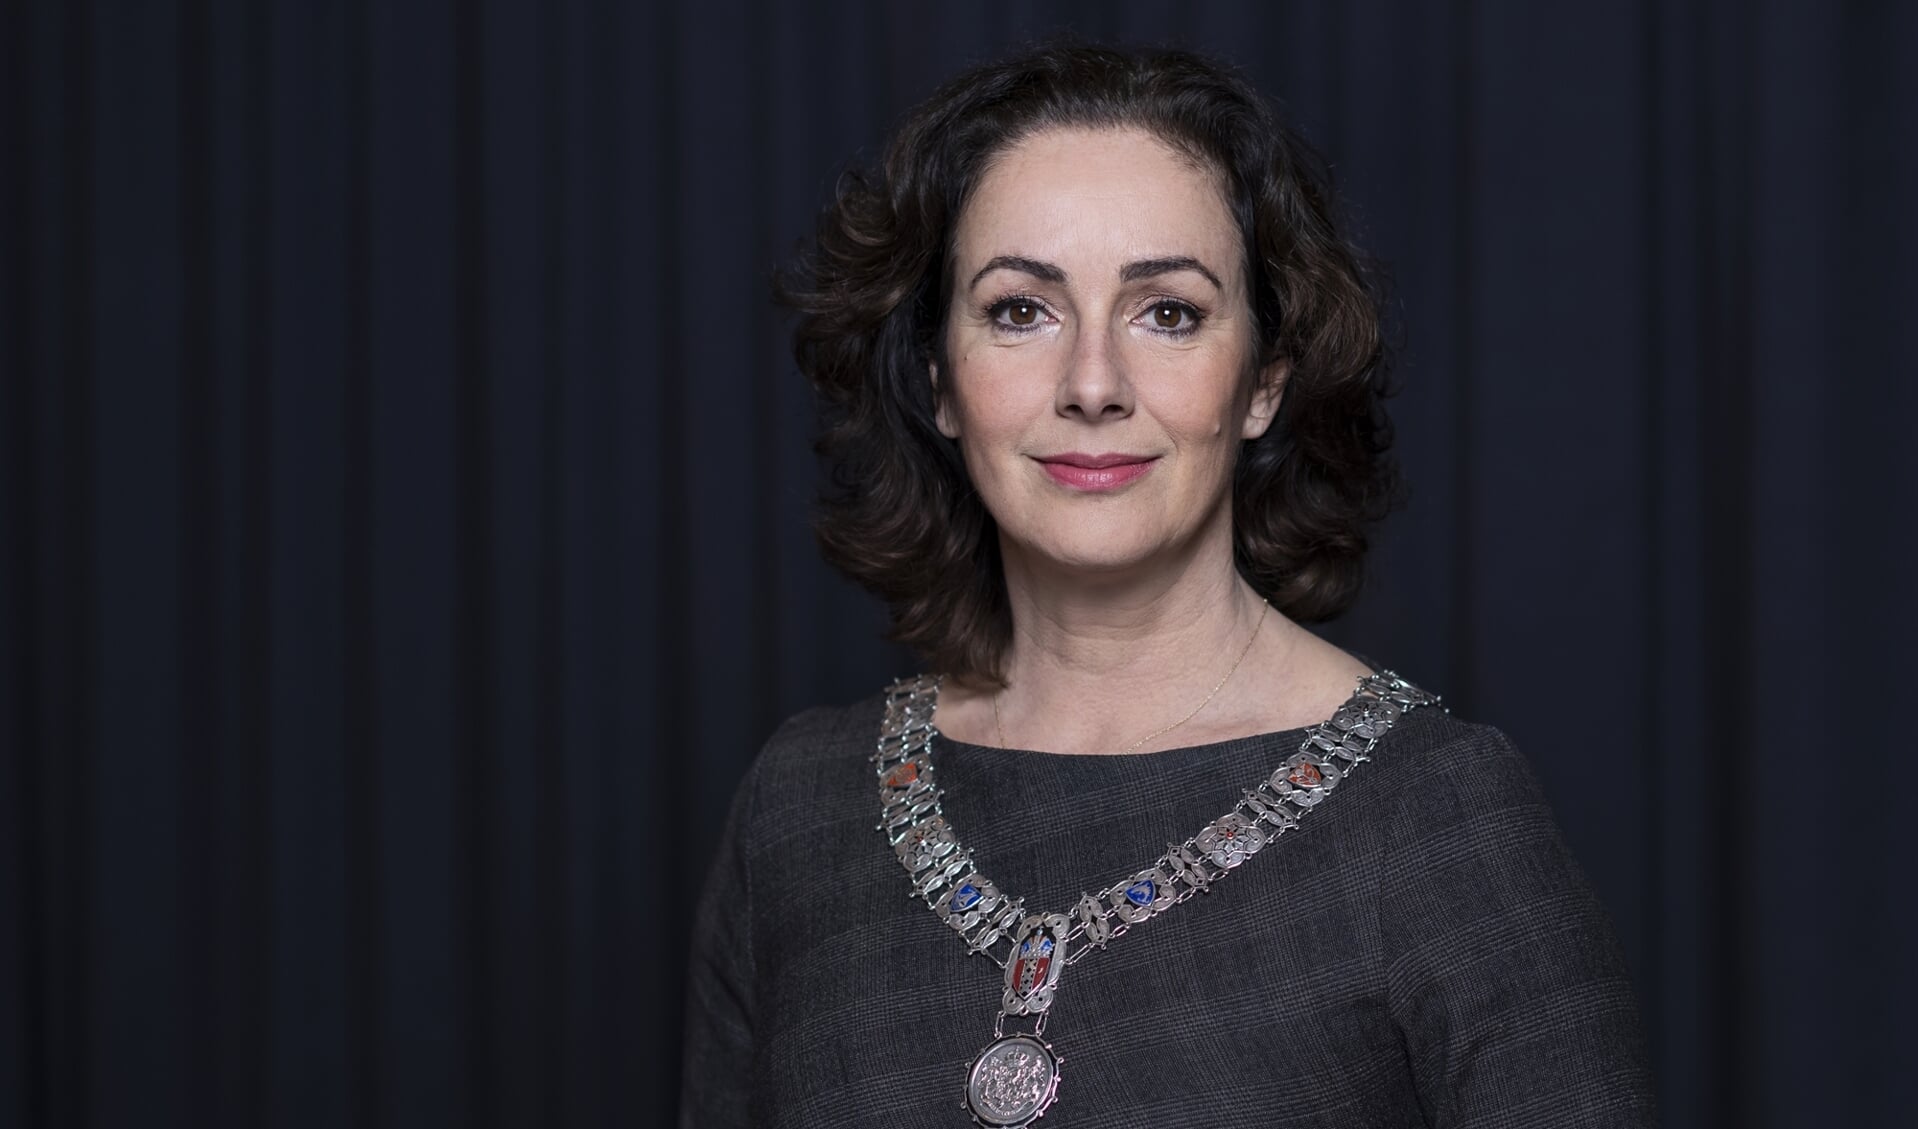 Burgemeester Femke Halsema van Amsterdam.